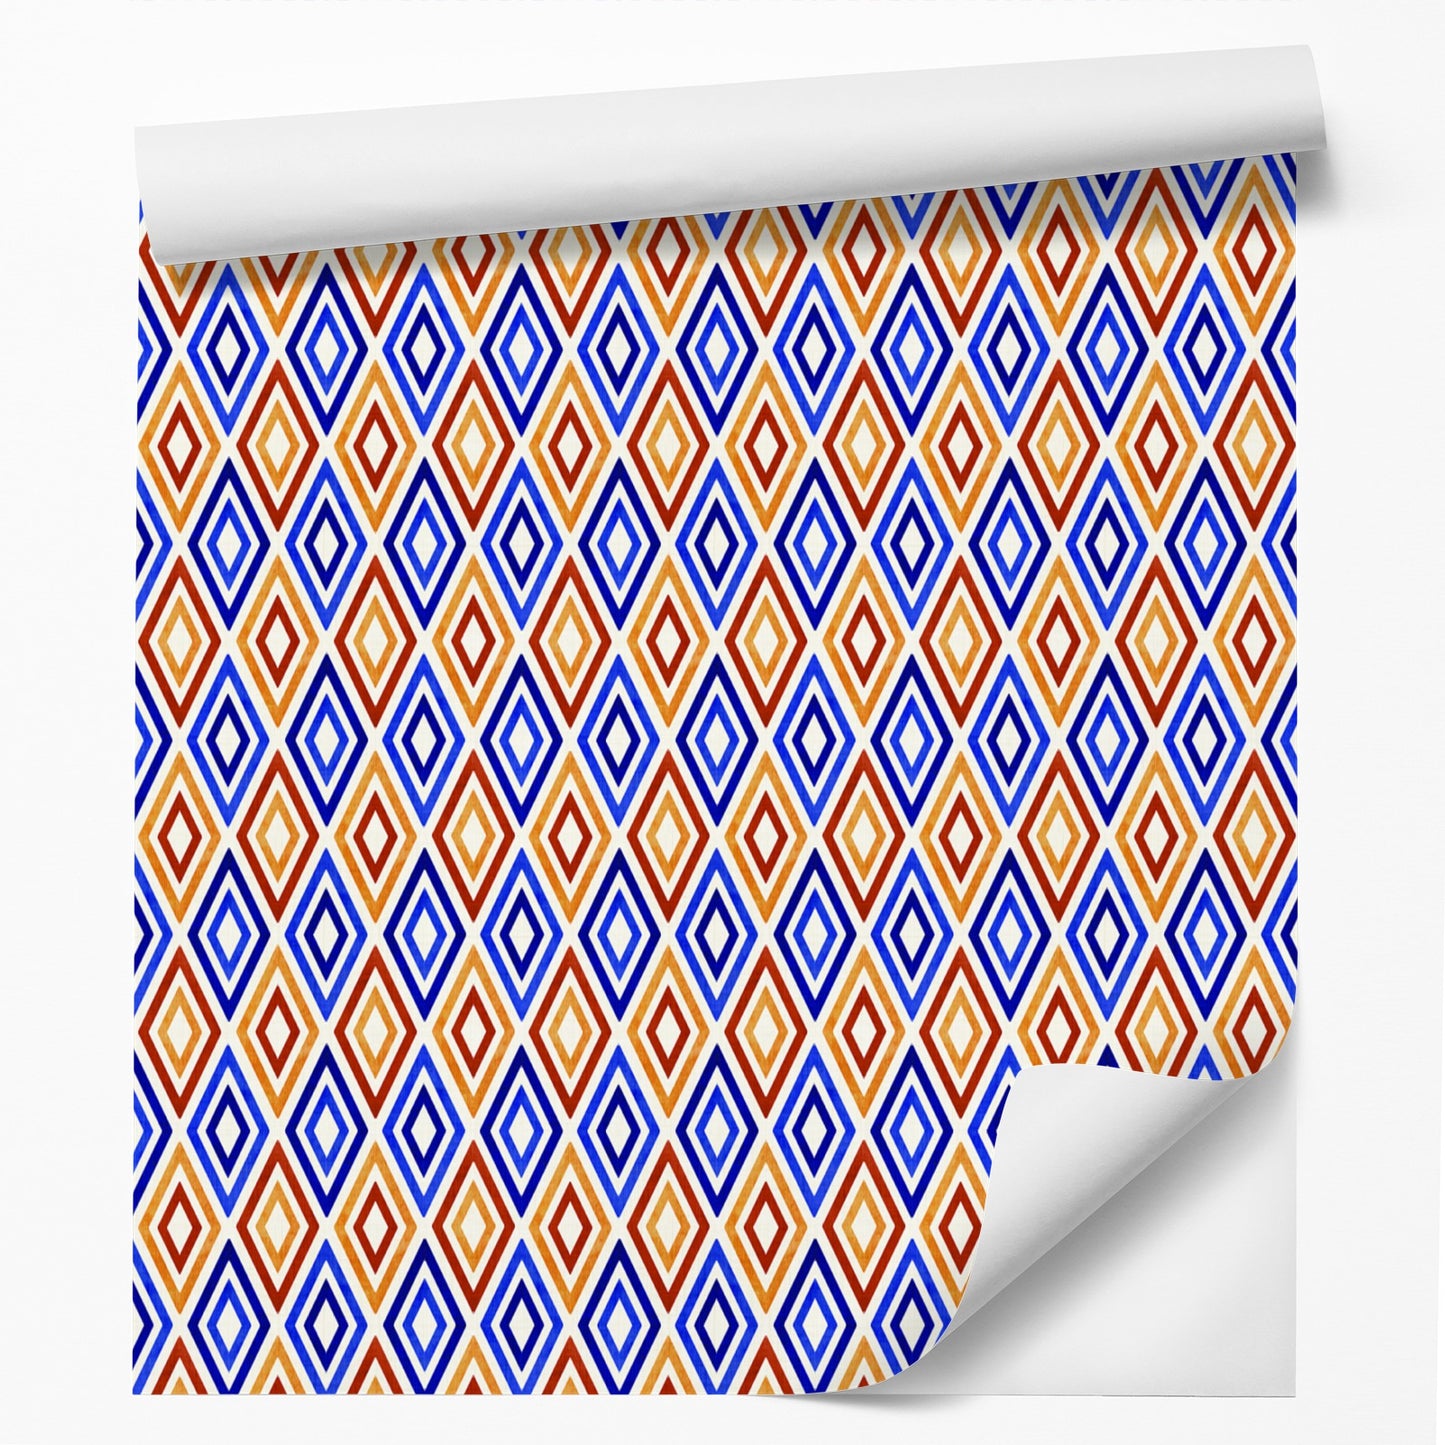 Peel & Stick Wallpaper Roll - Mediterranean Mood by Modern Tropical